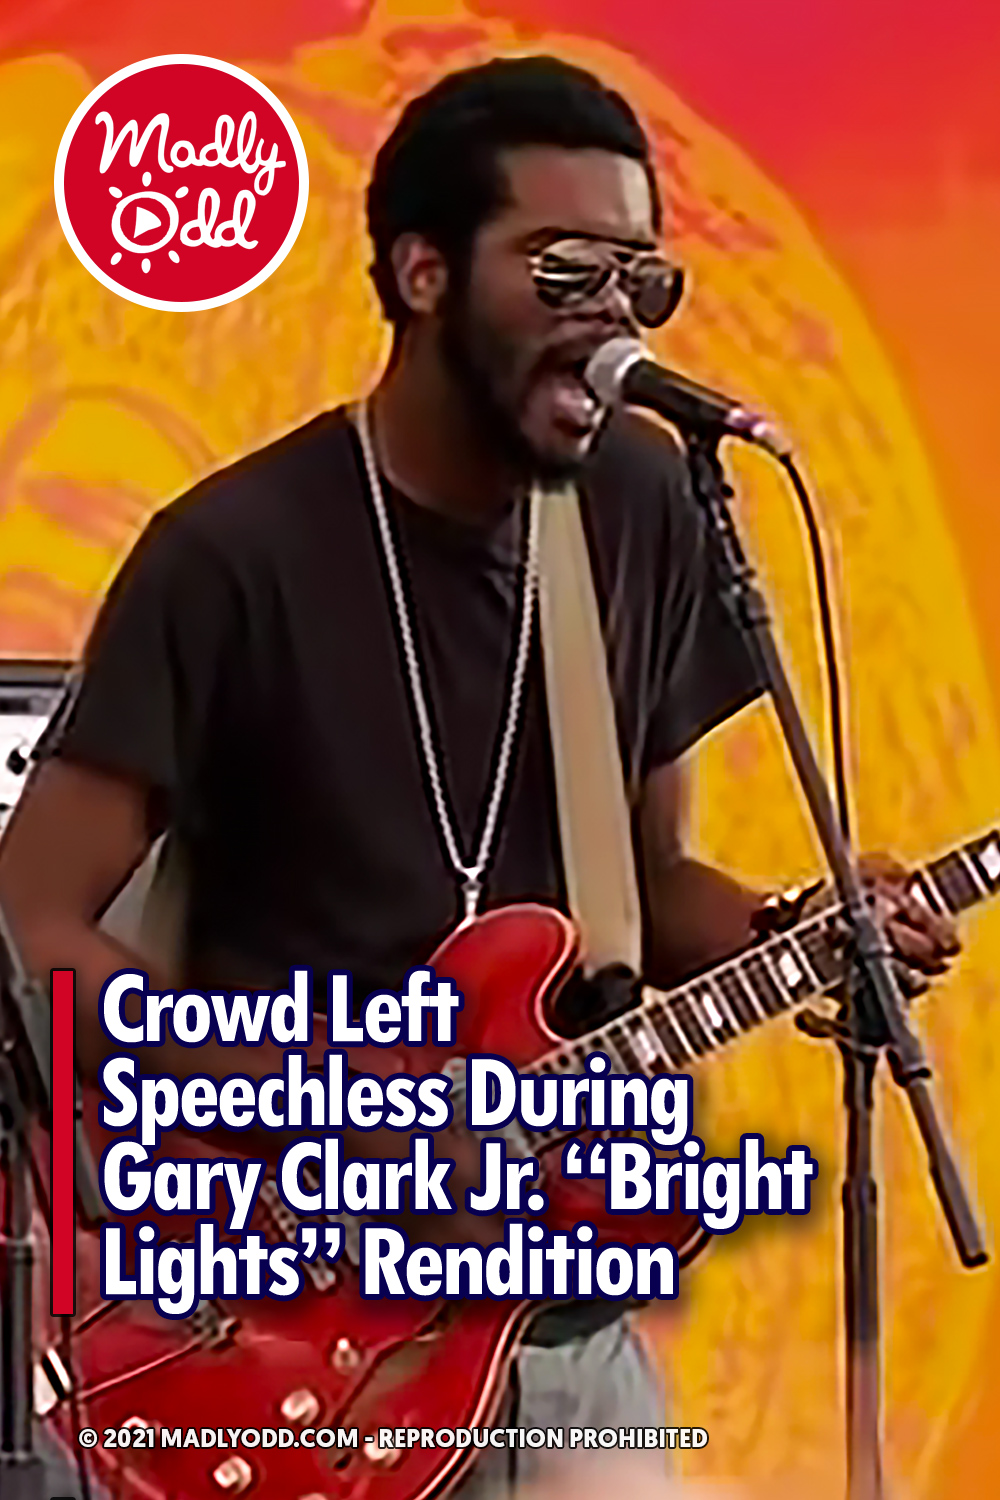 Crowd Left Speechless During Gary Clark Jr. “Bright Lights” Rendition